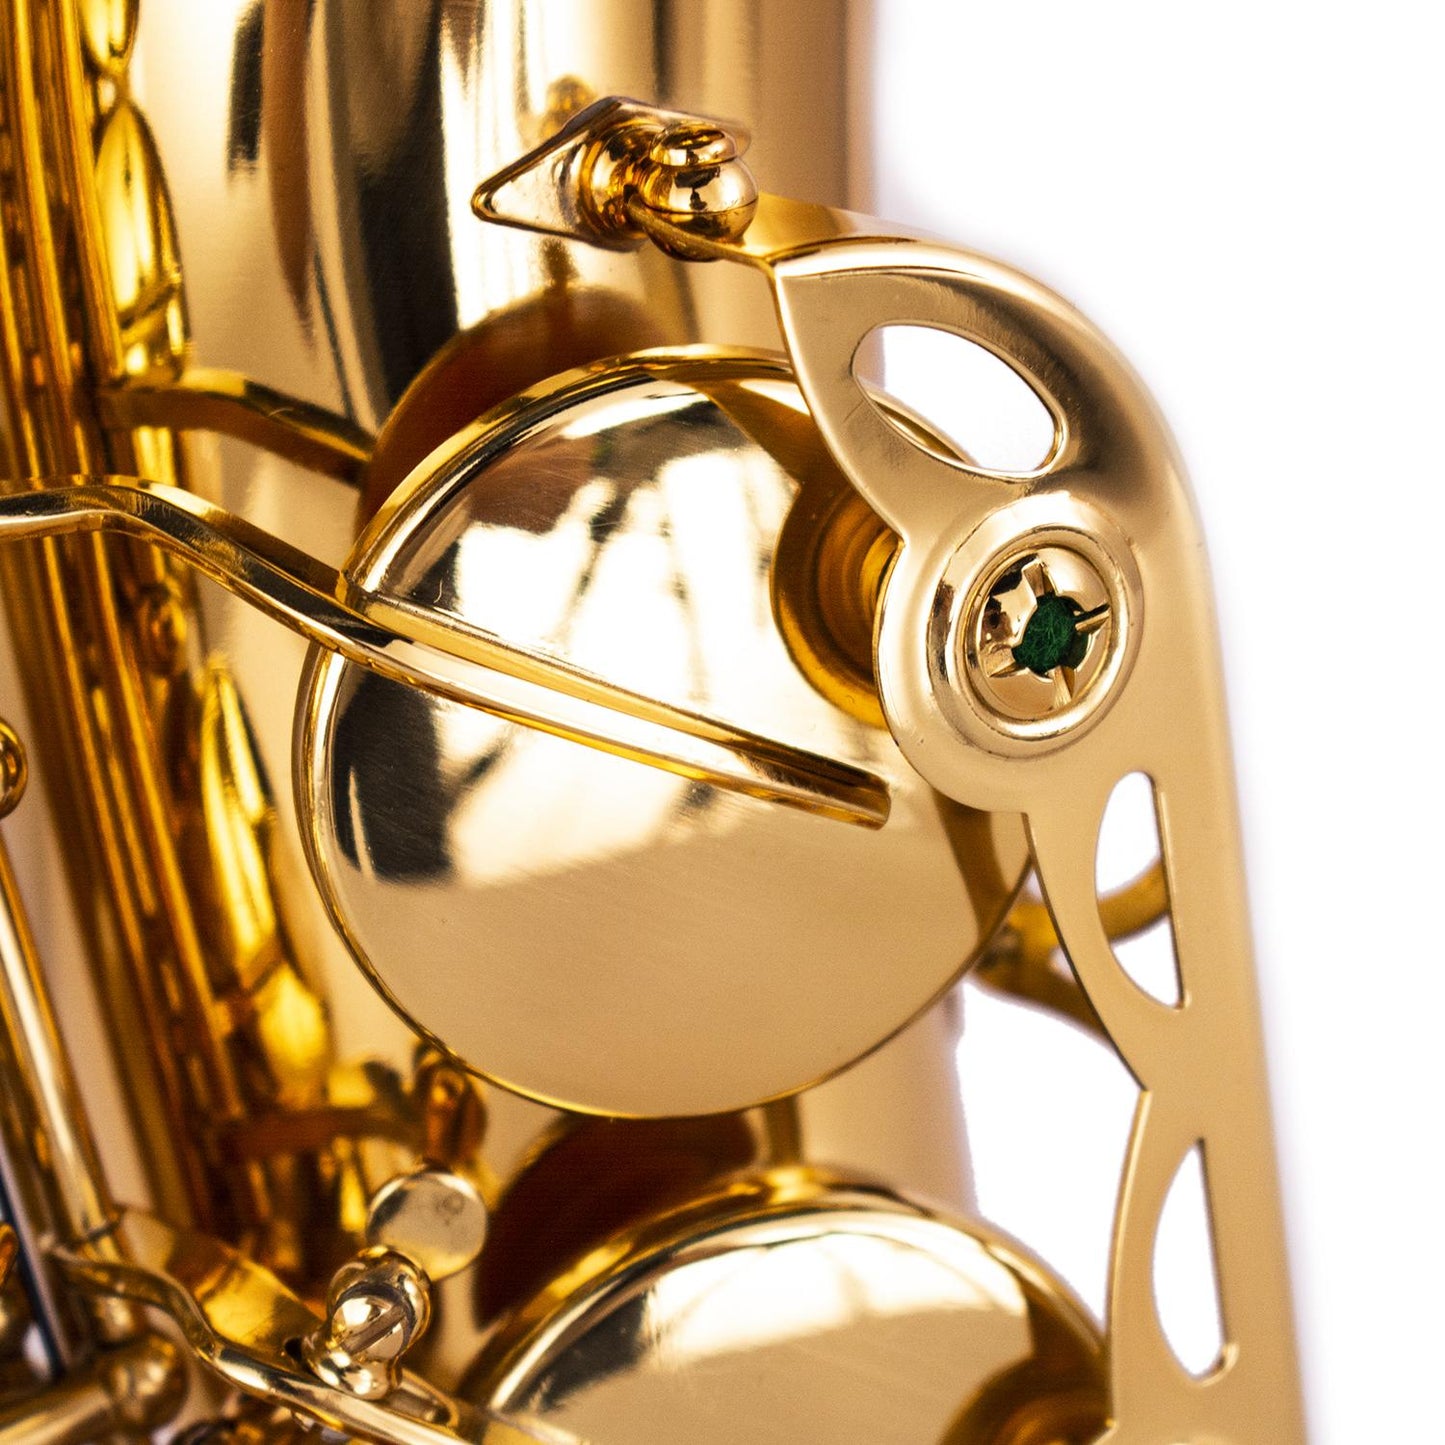 Saxofón Alto FT-6430L KLINGT